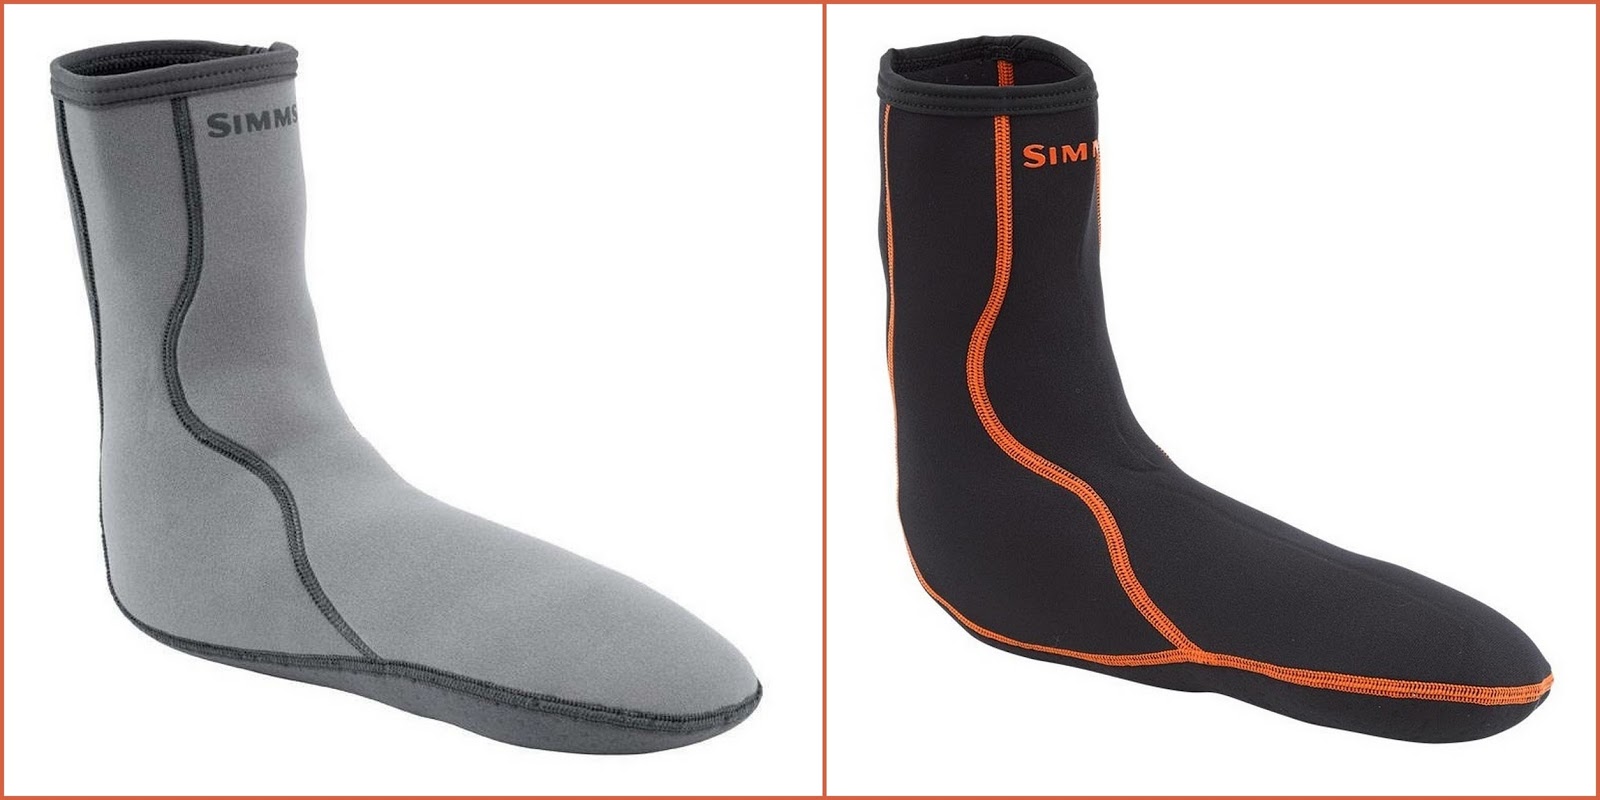 Simms Neoprene Wading Socks S / Steel